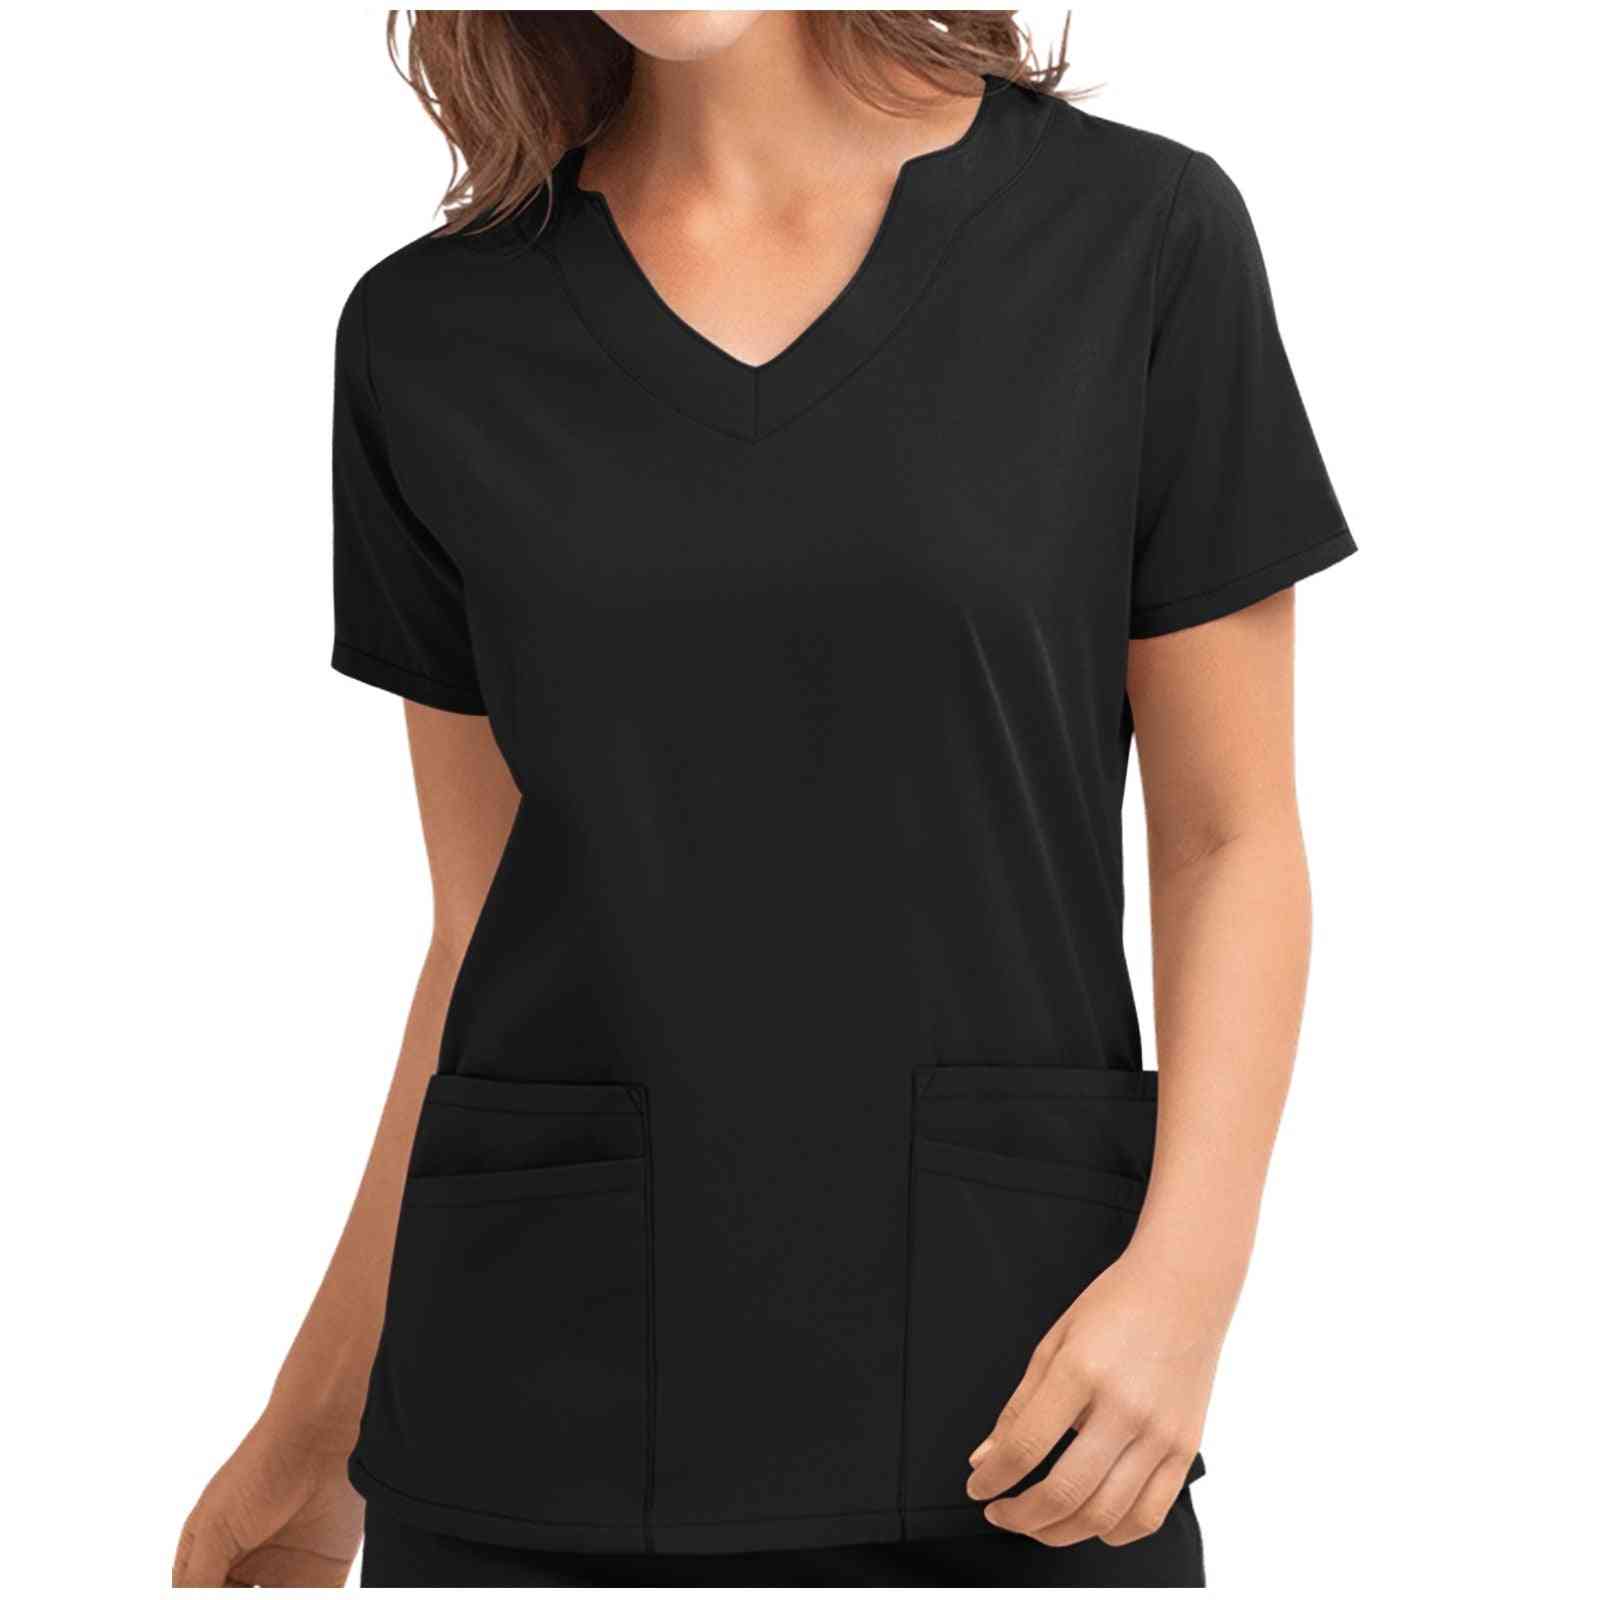 Women High Temperature Sterilizable Clothing Short Sleeve V-neck Tops